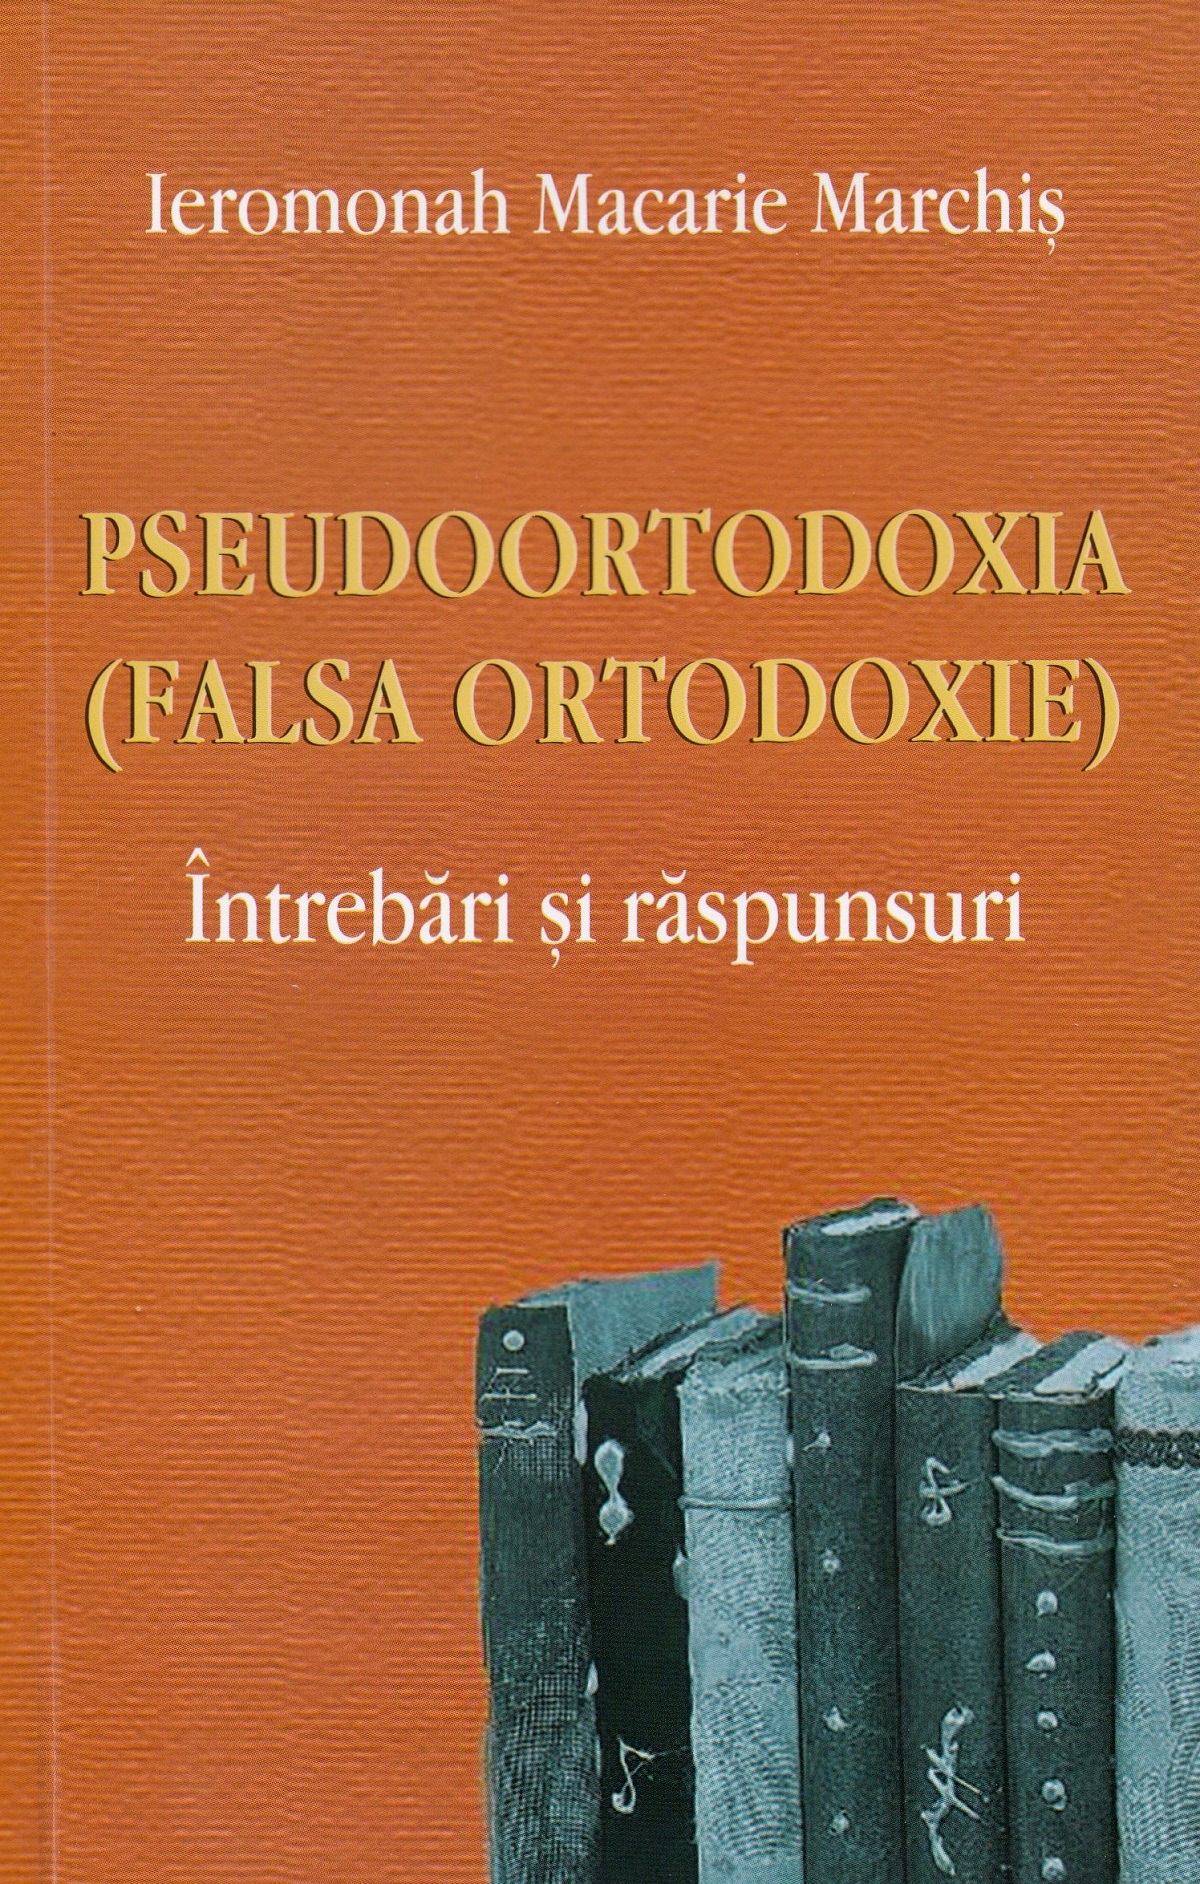 Pseudoortodoxia (falsa ortodoxie) - Ieromonah Macarie Marchis